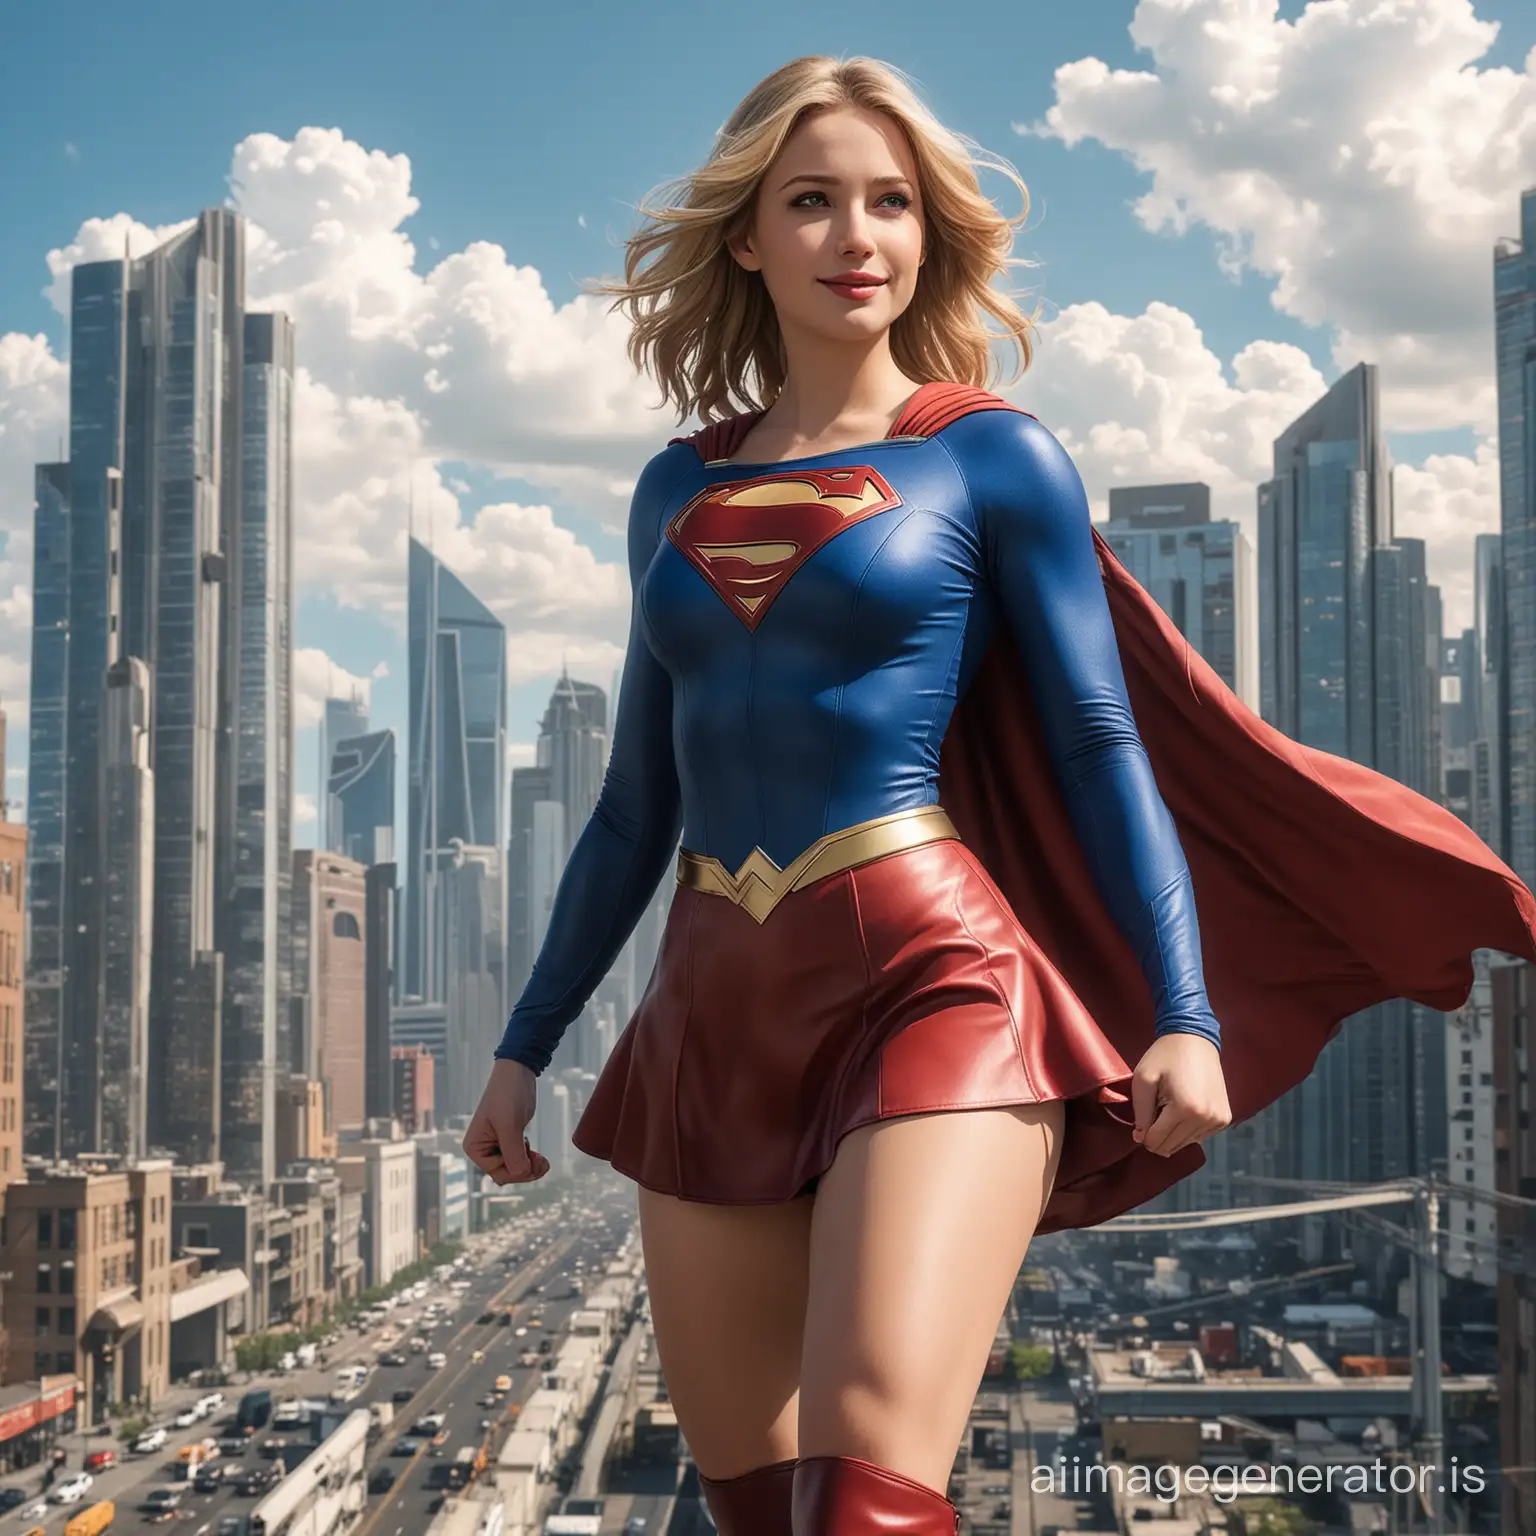 Joyful-Supergirl-Floating-in-Urban-Skyline-Modern-Realistic-DC-Comics-Art